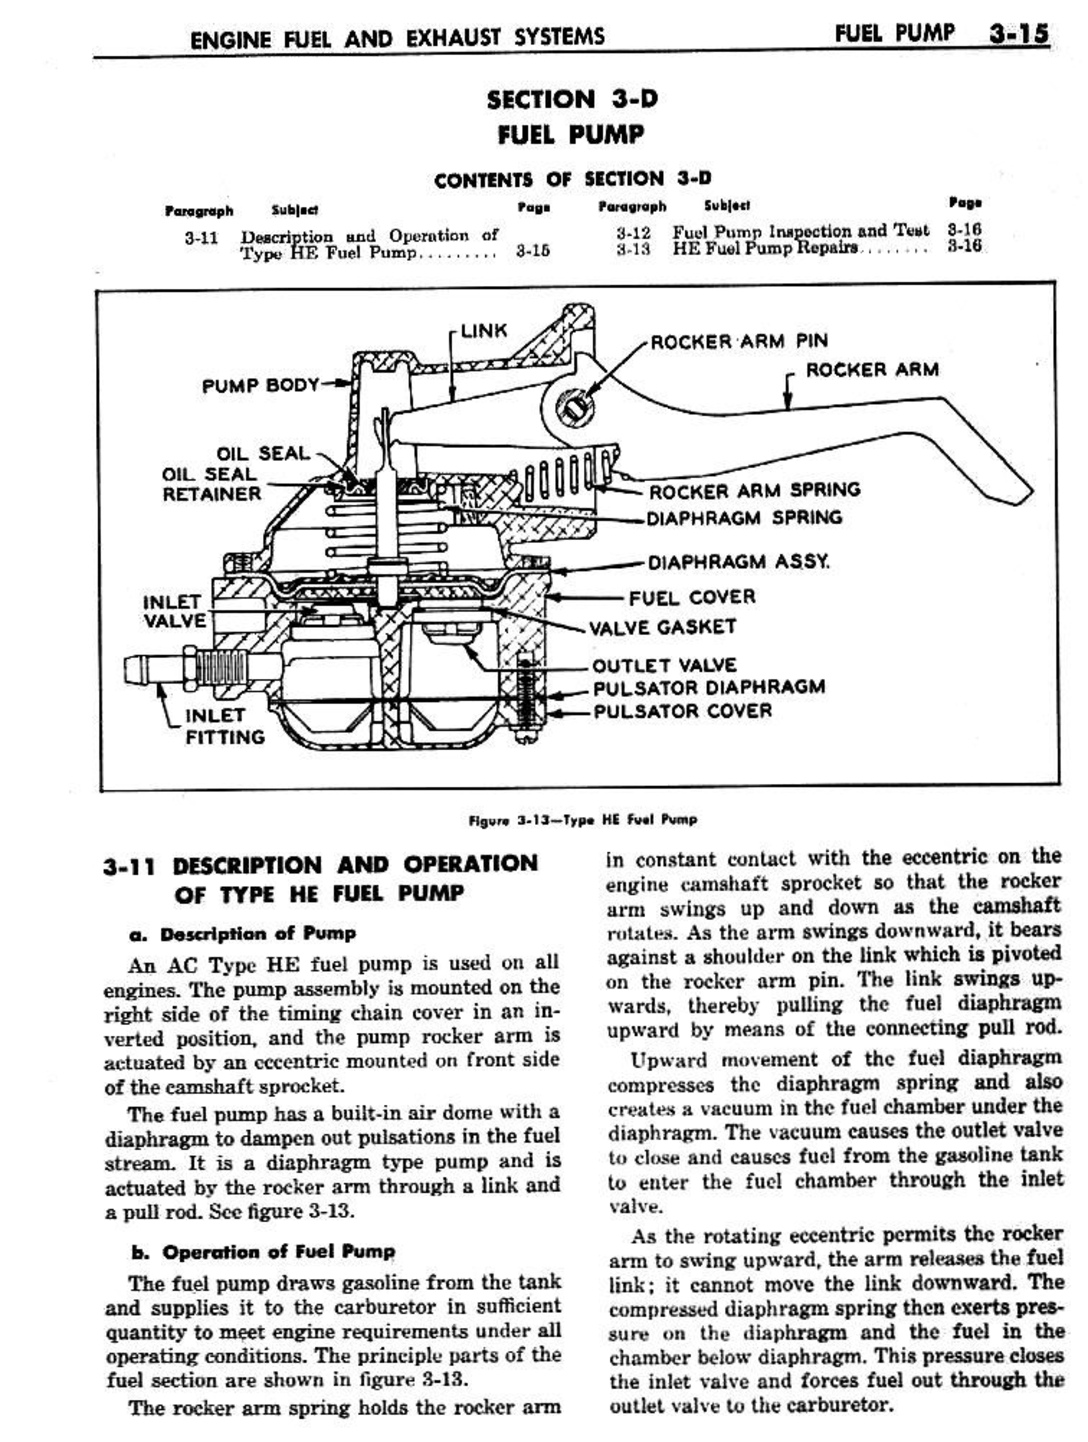 n_04 1959 Buick Shop Manual - Engine Fuel & Exhaust-015-015.jpg